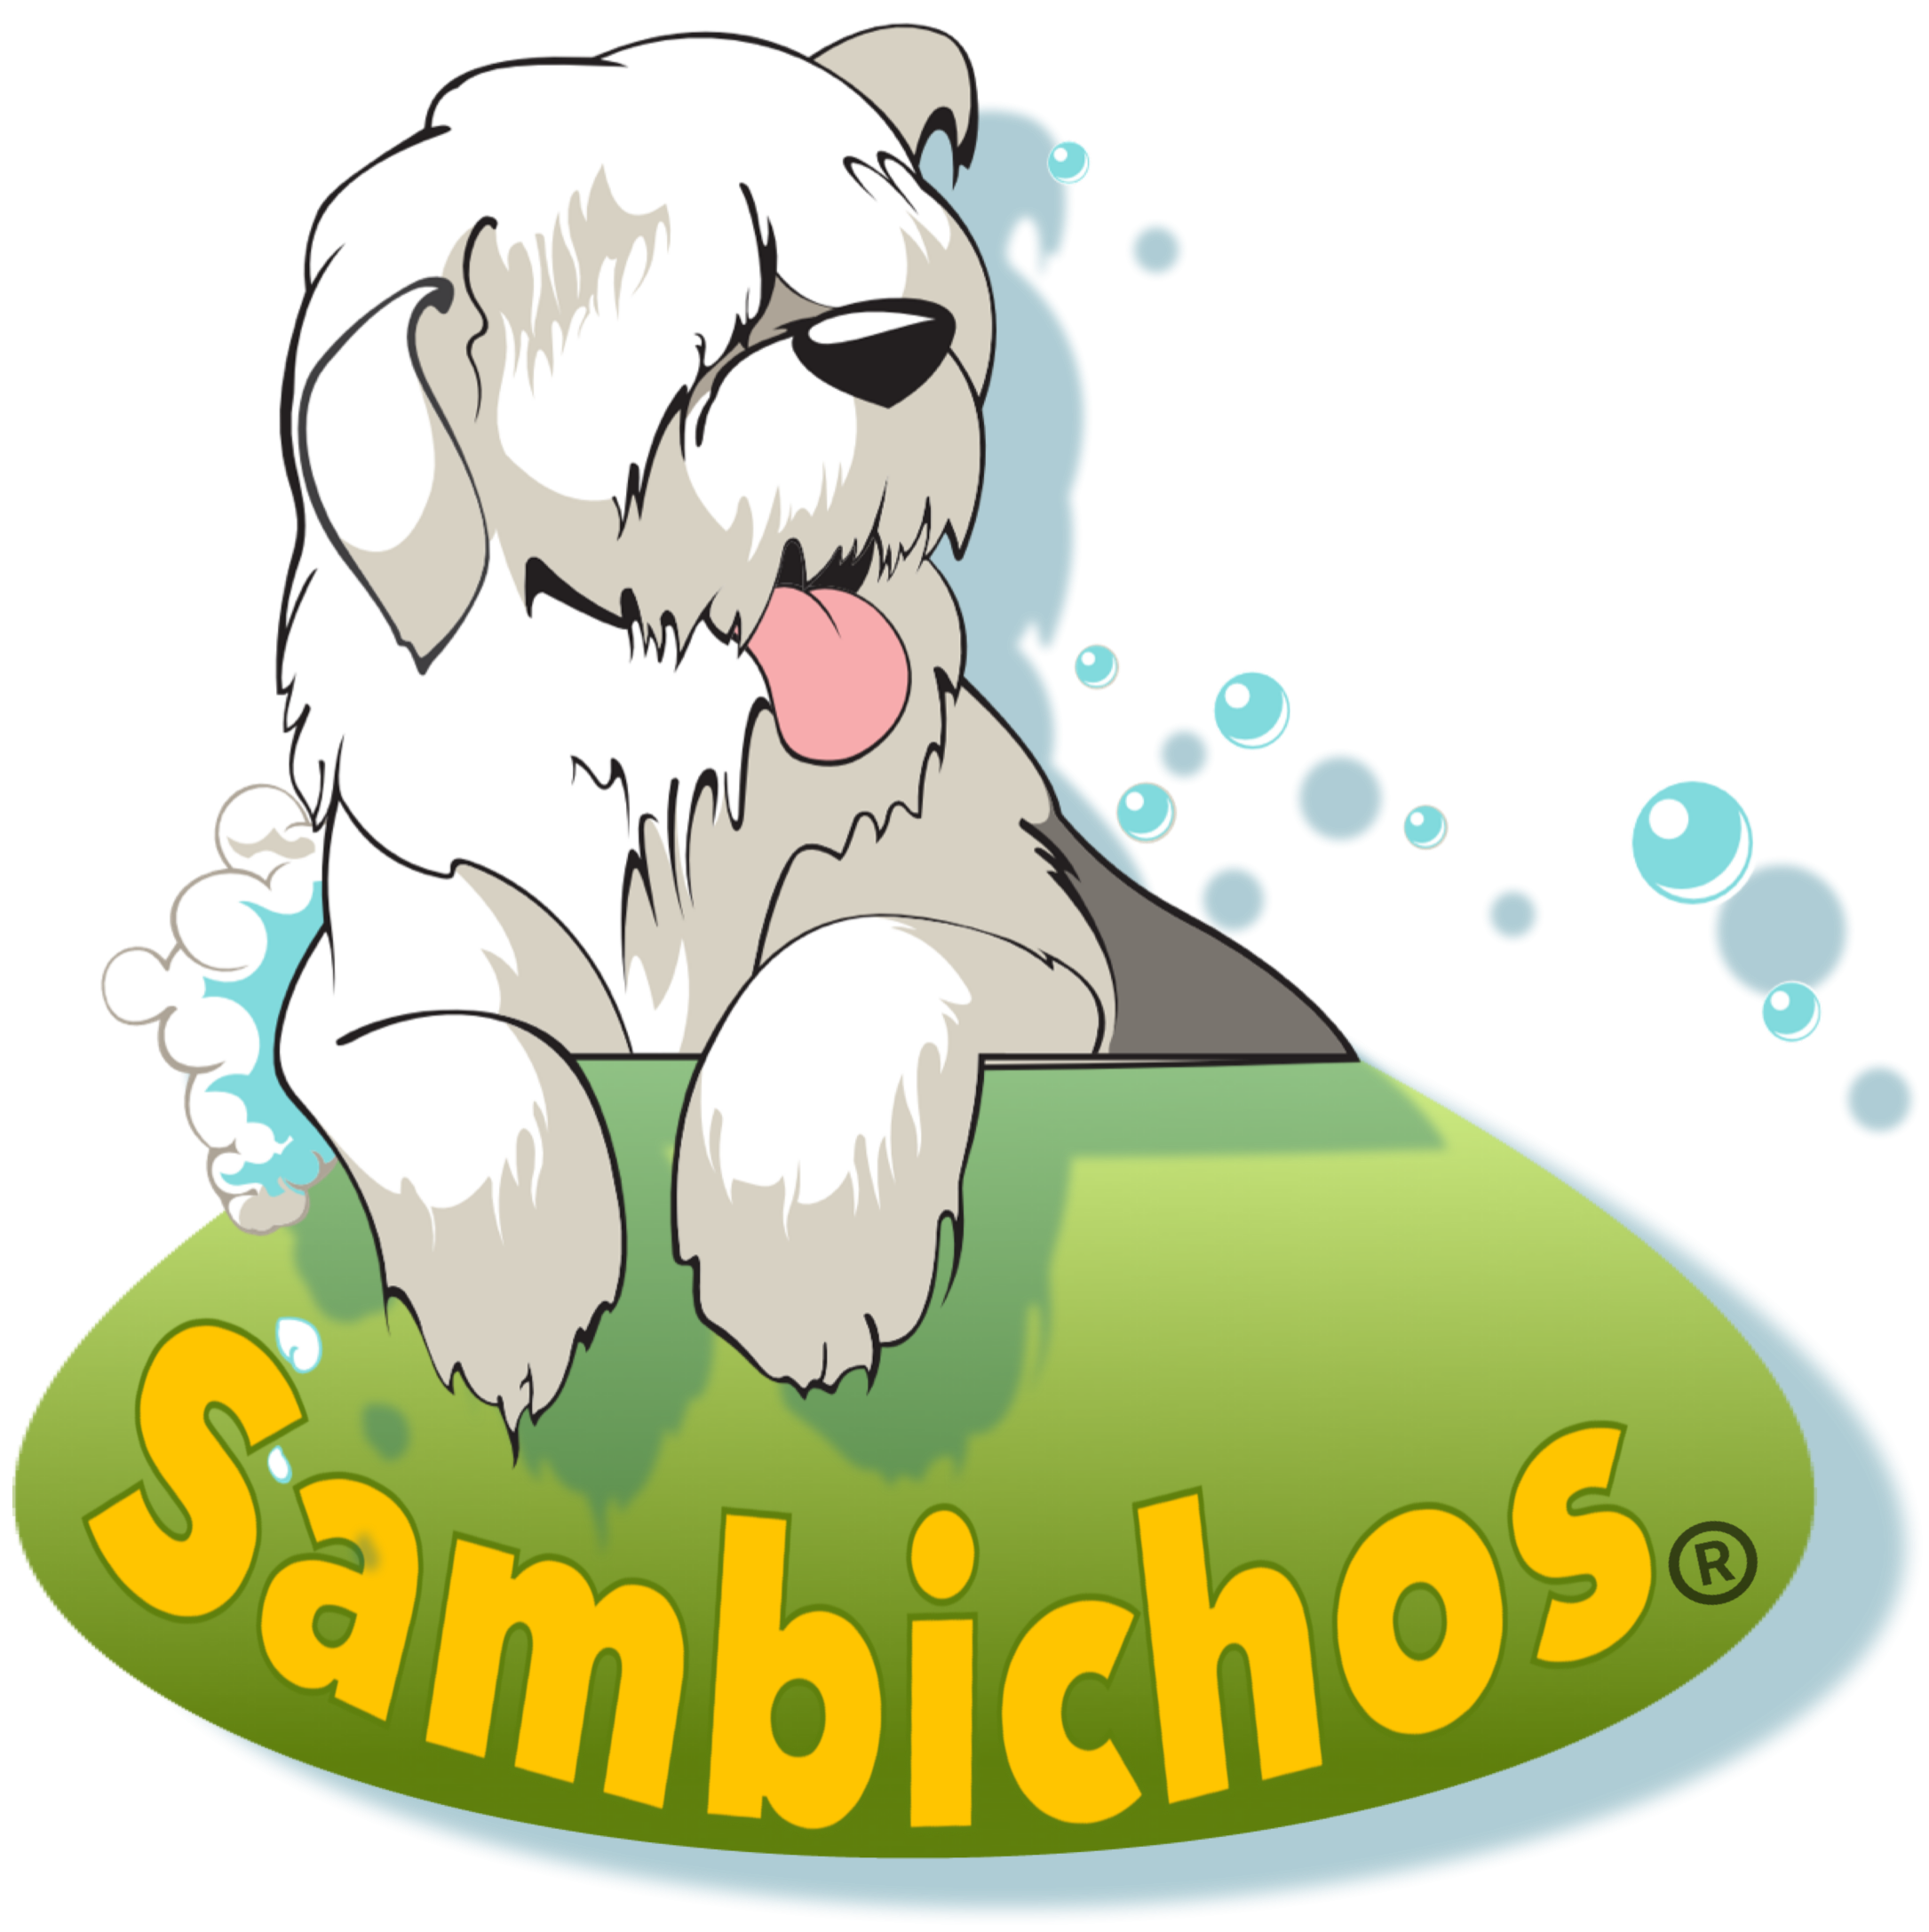 Sambichos